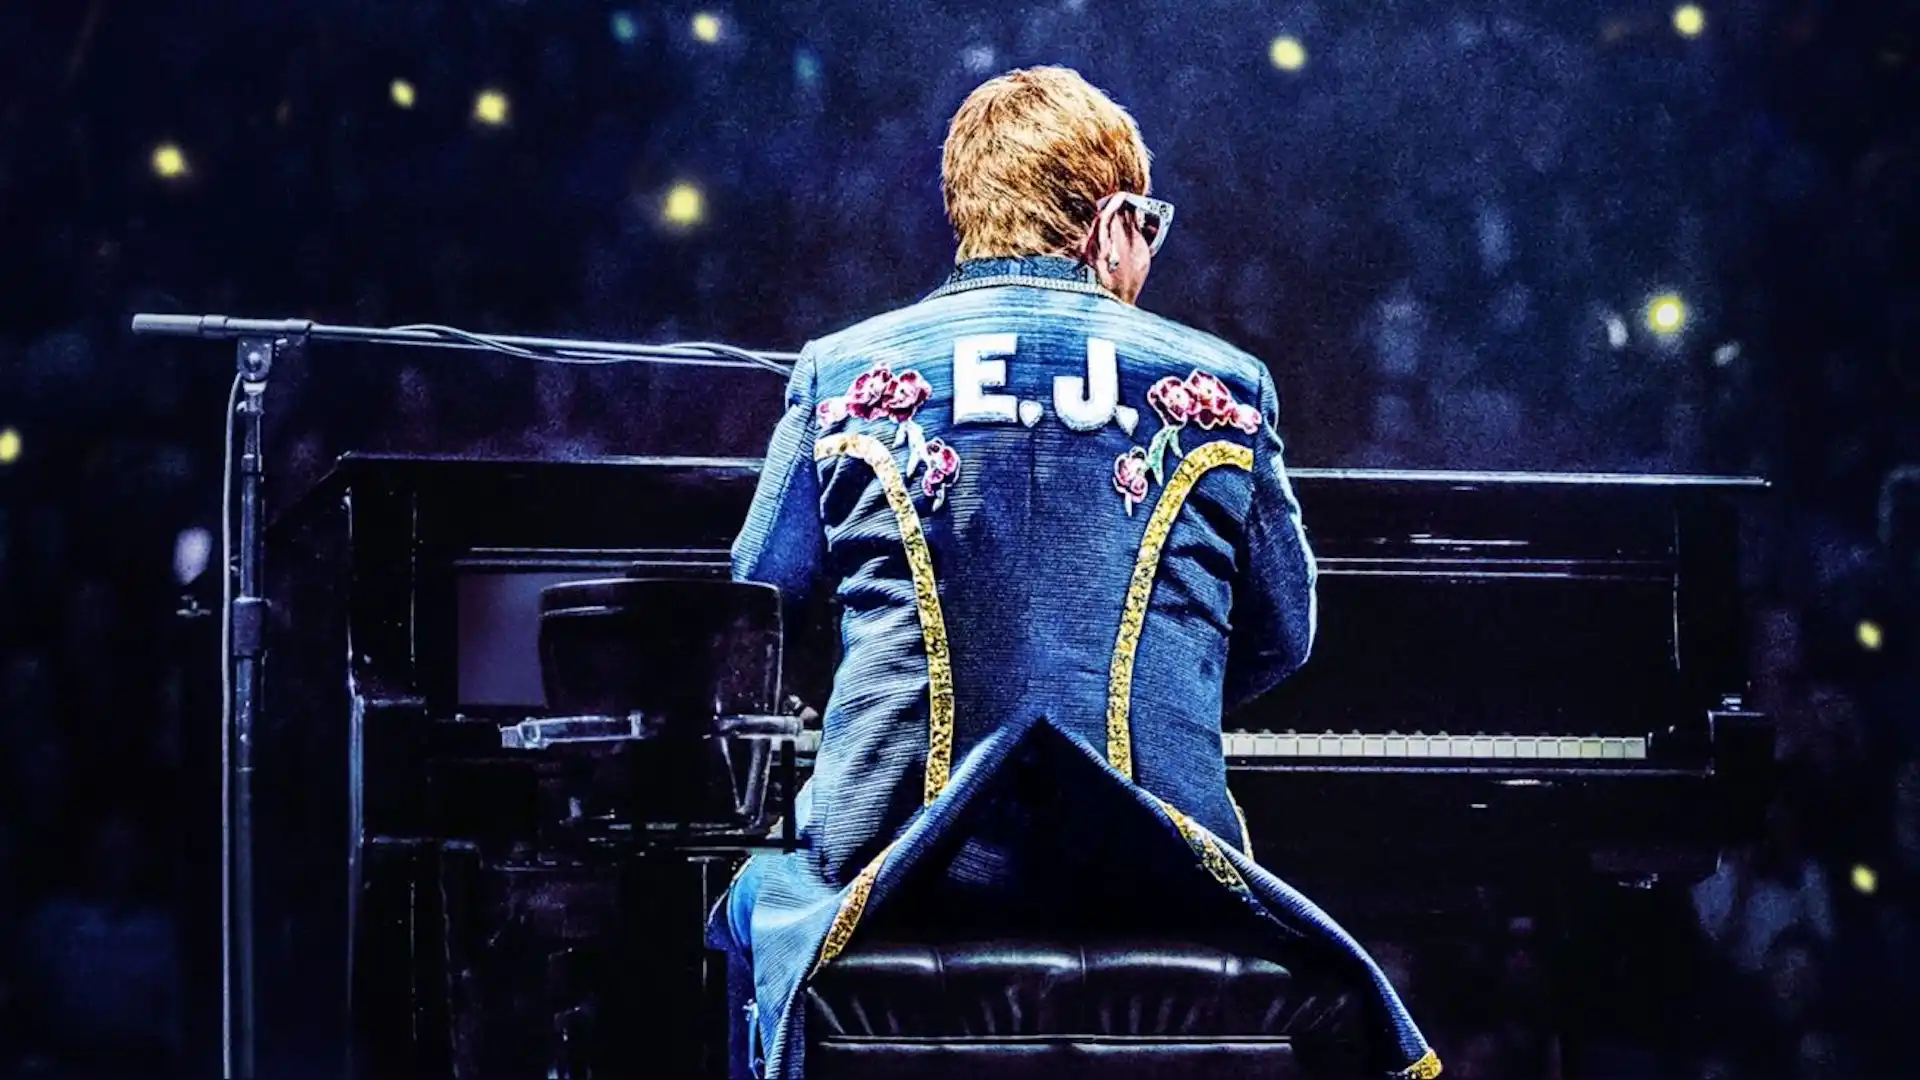 Elton John's concert available to watch online on Disney Plus